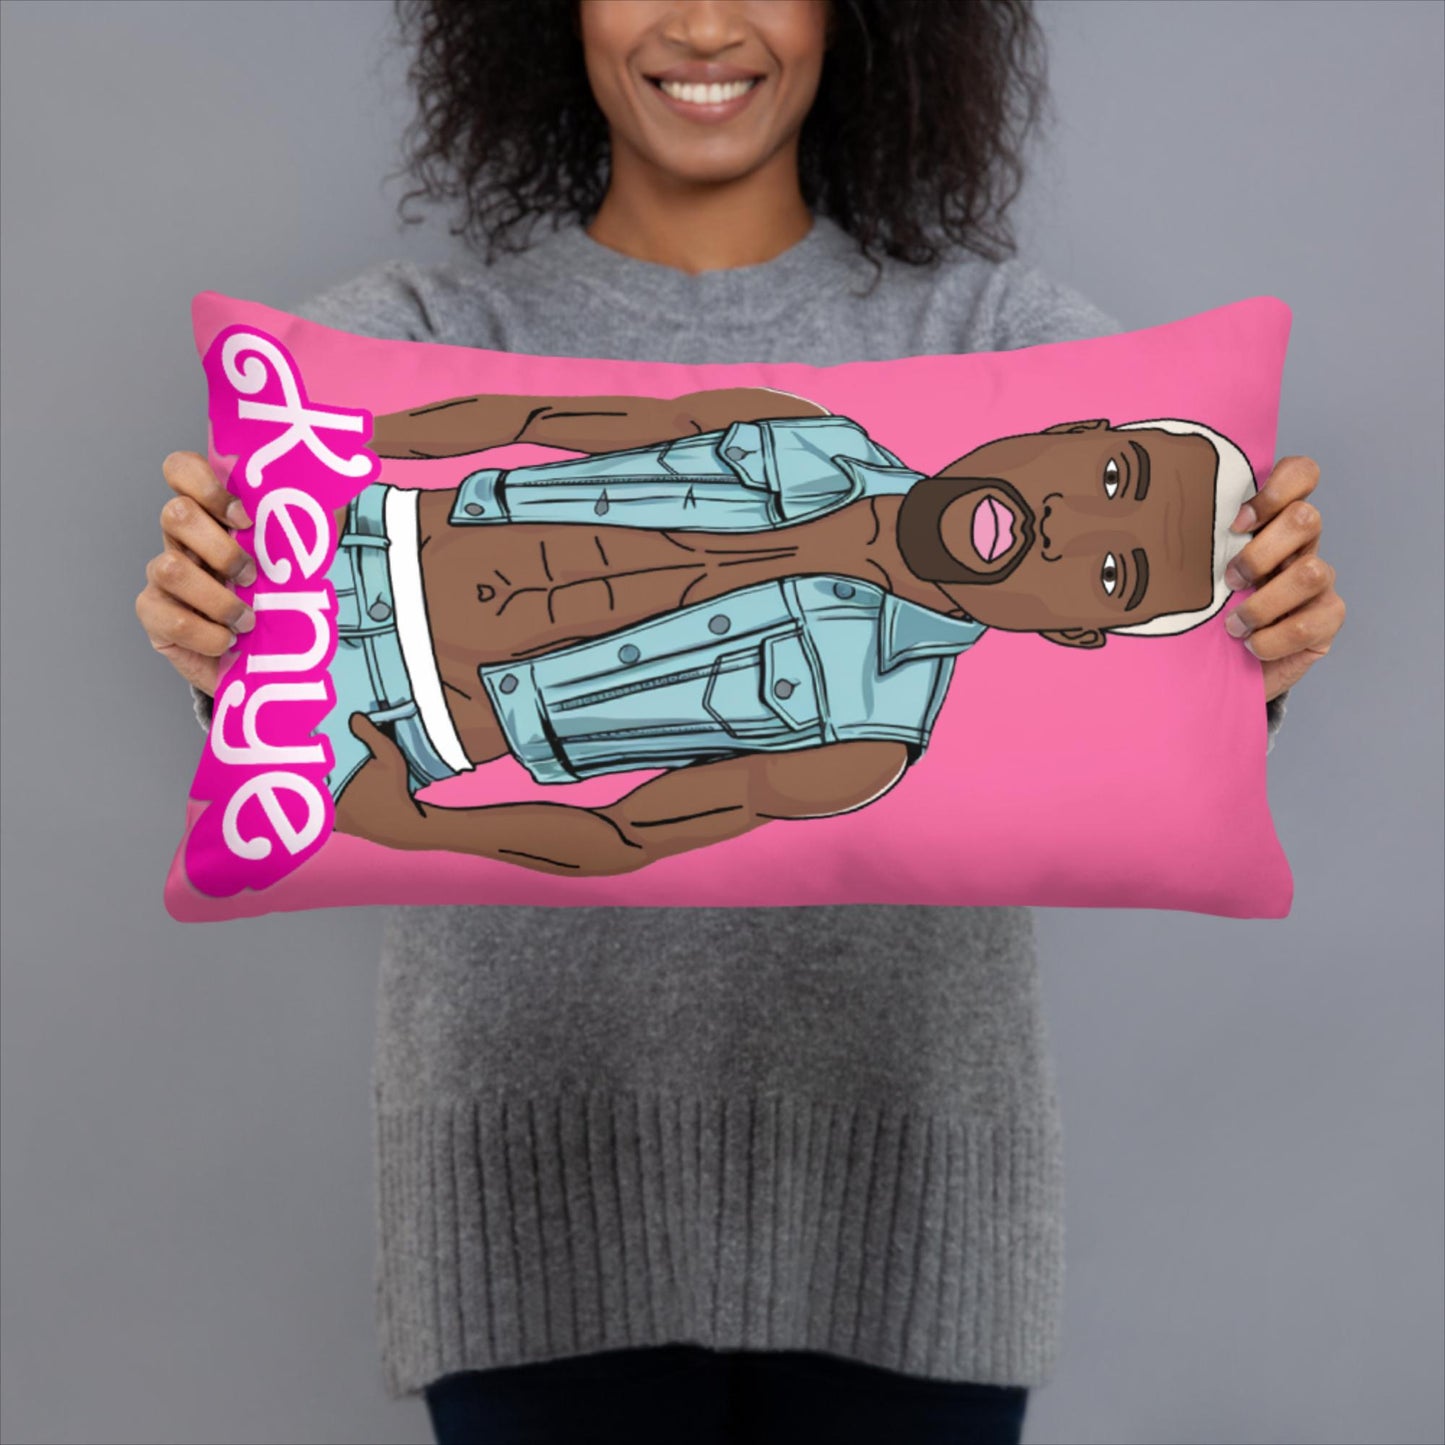 Kenye Barbie Ken Ryan Gosling Kanye West Pillow Next Cult Brand